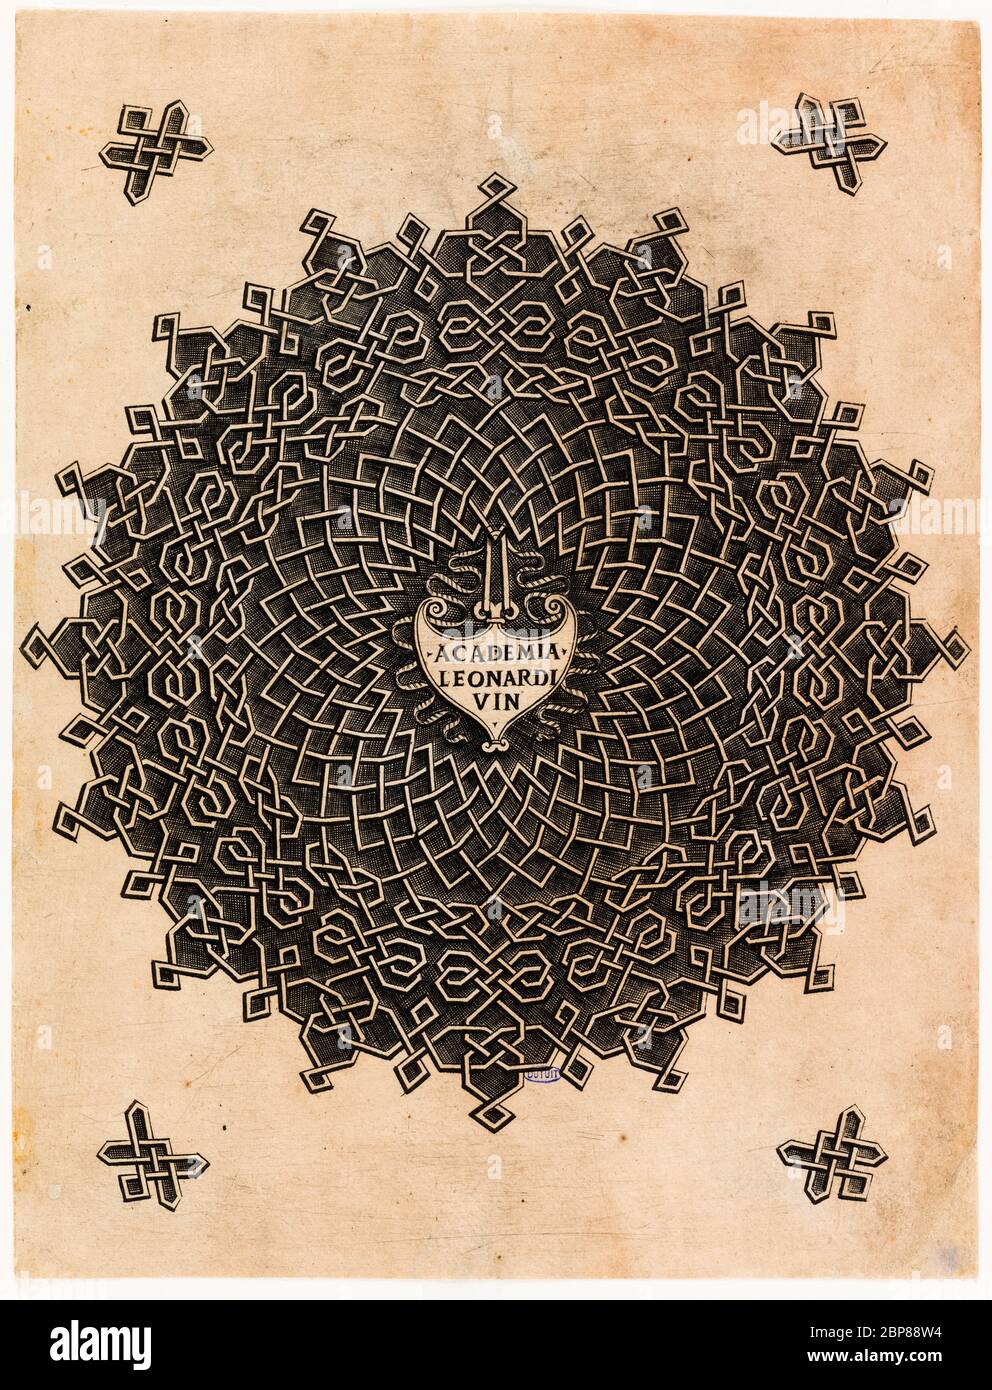 Leonardo Da Vinci  (unknown engraver), Labyrinth: geometric knots forming a pattern, woodblock print, 1490-1500 Stock Photo